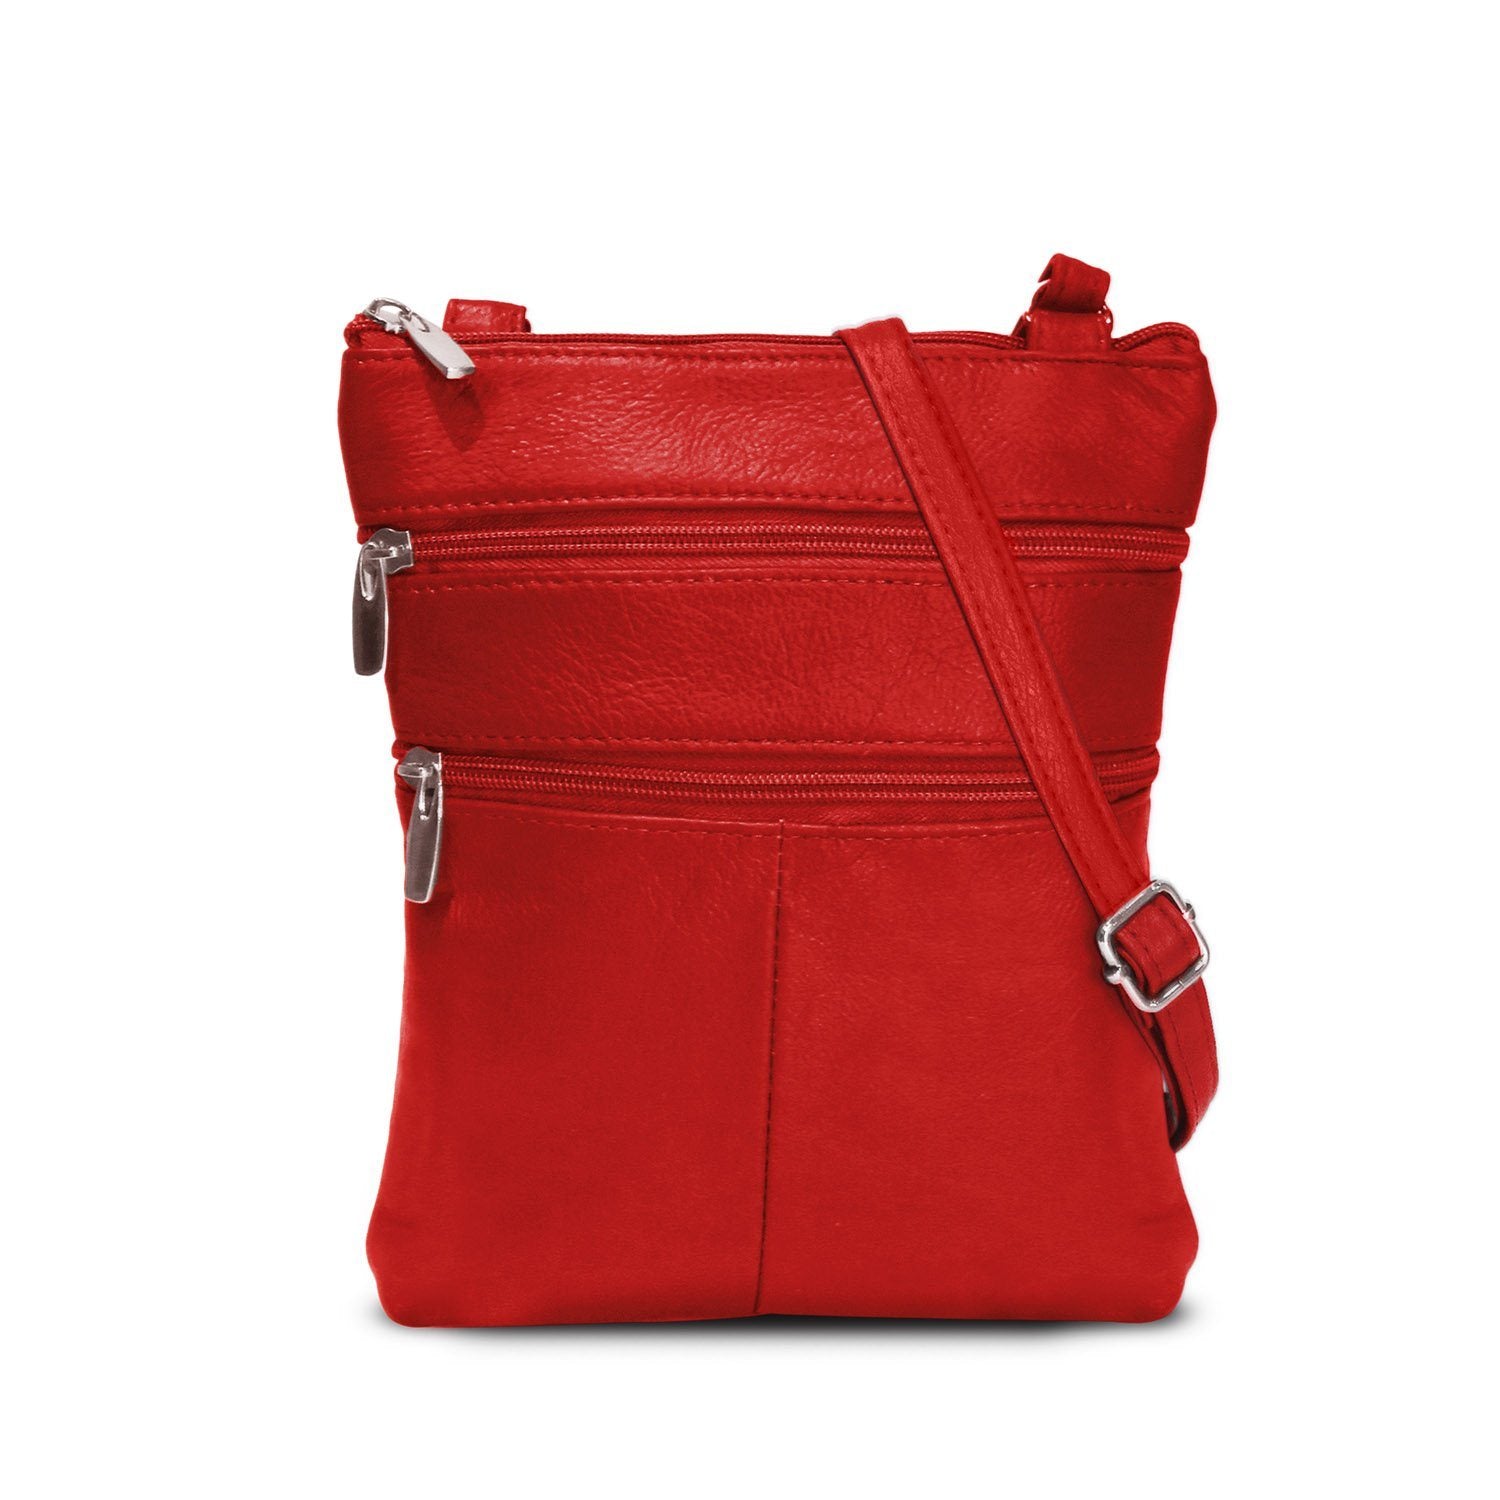 QIUSGE Leather Crossbody Bags For Women, Soft Purses Handbags